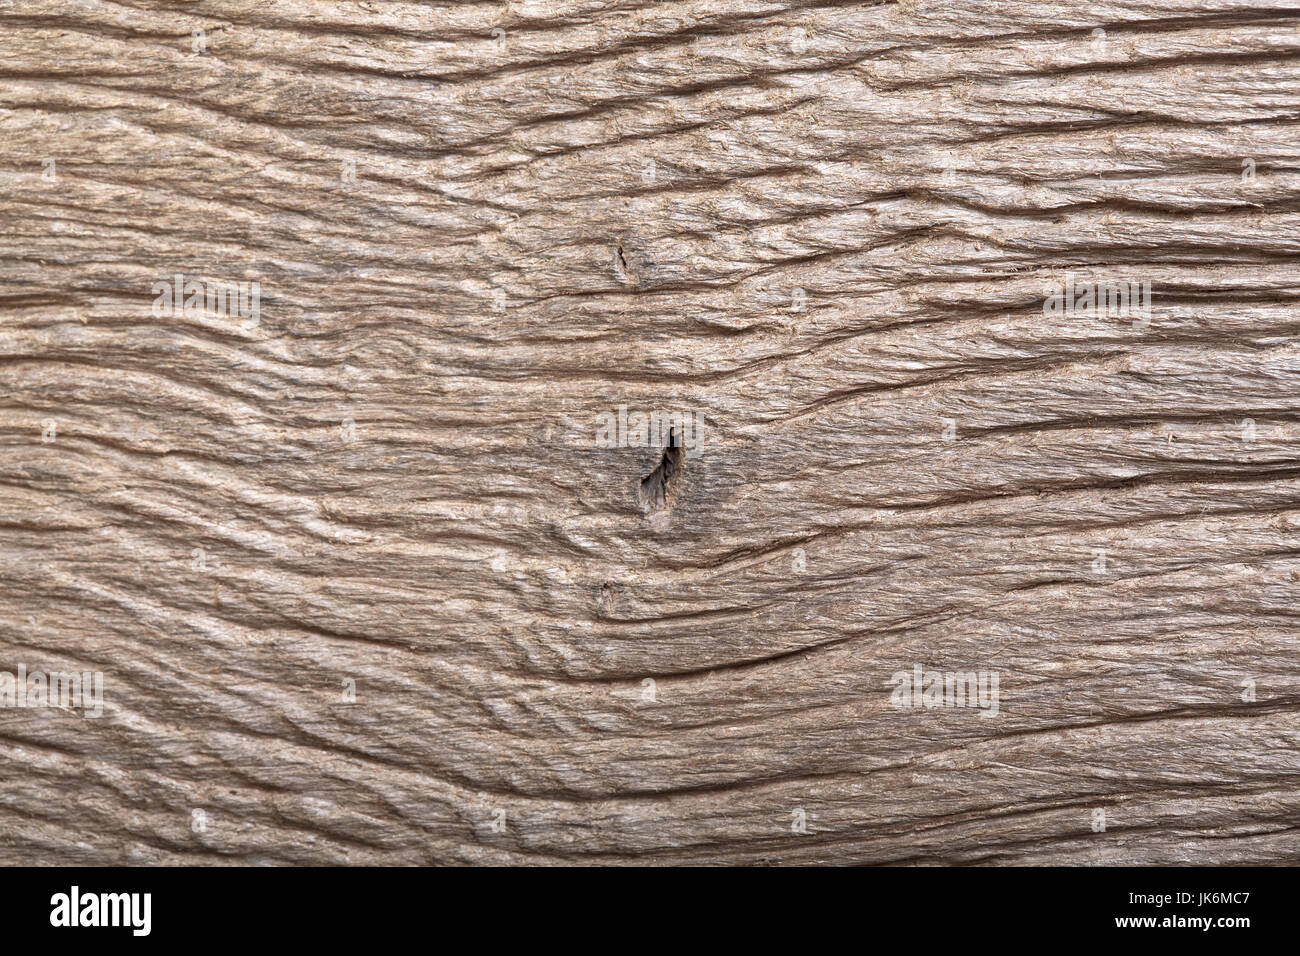 Prehistoric wood bog oak with fantastic scratched texture. Stock Photo